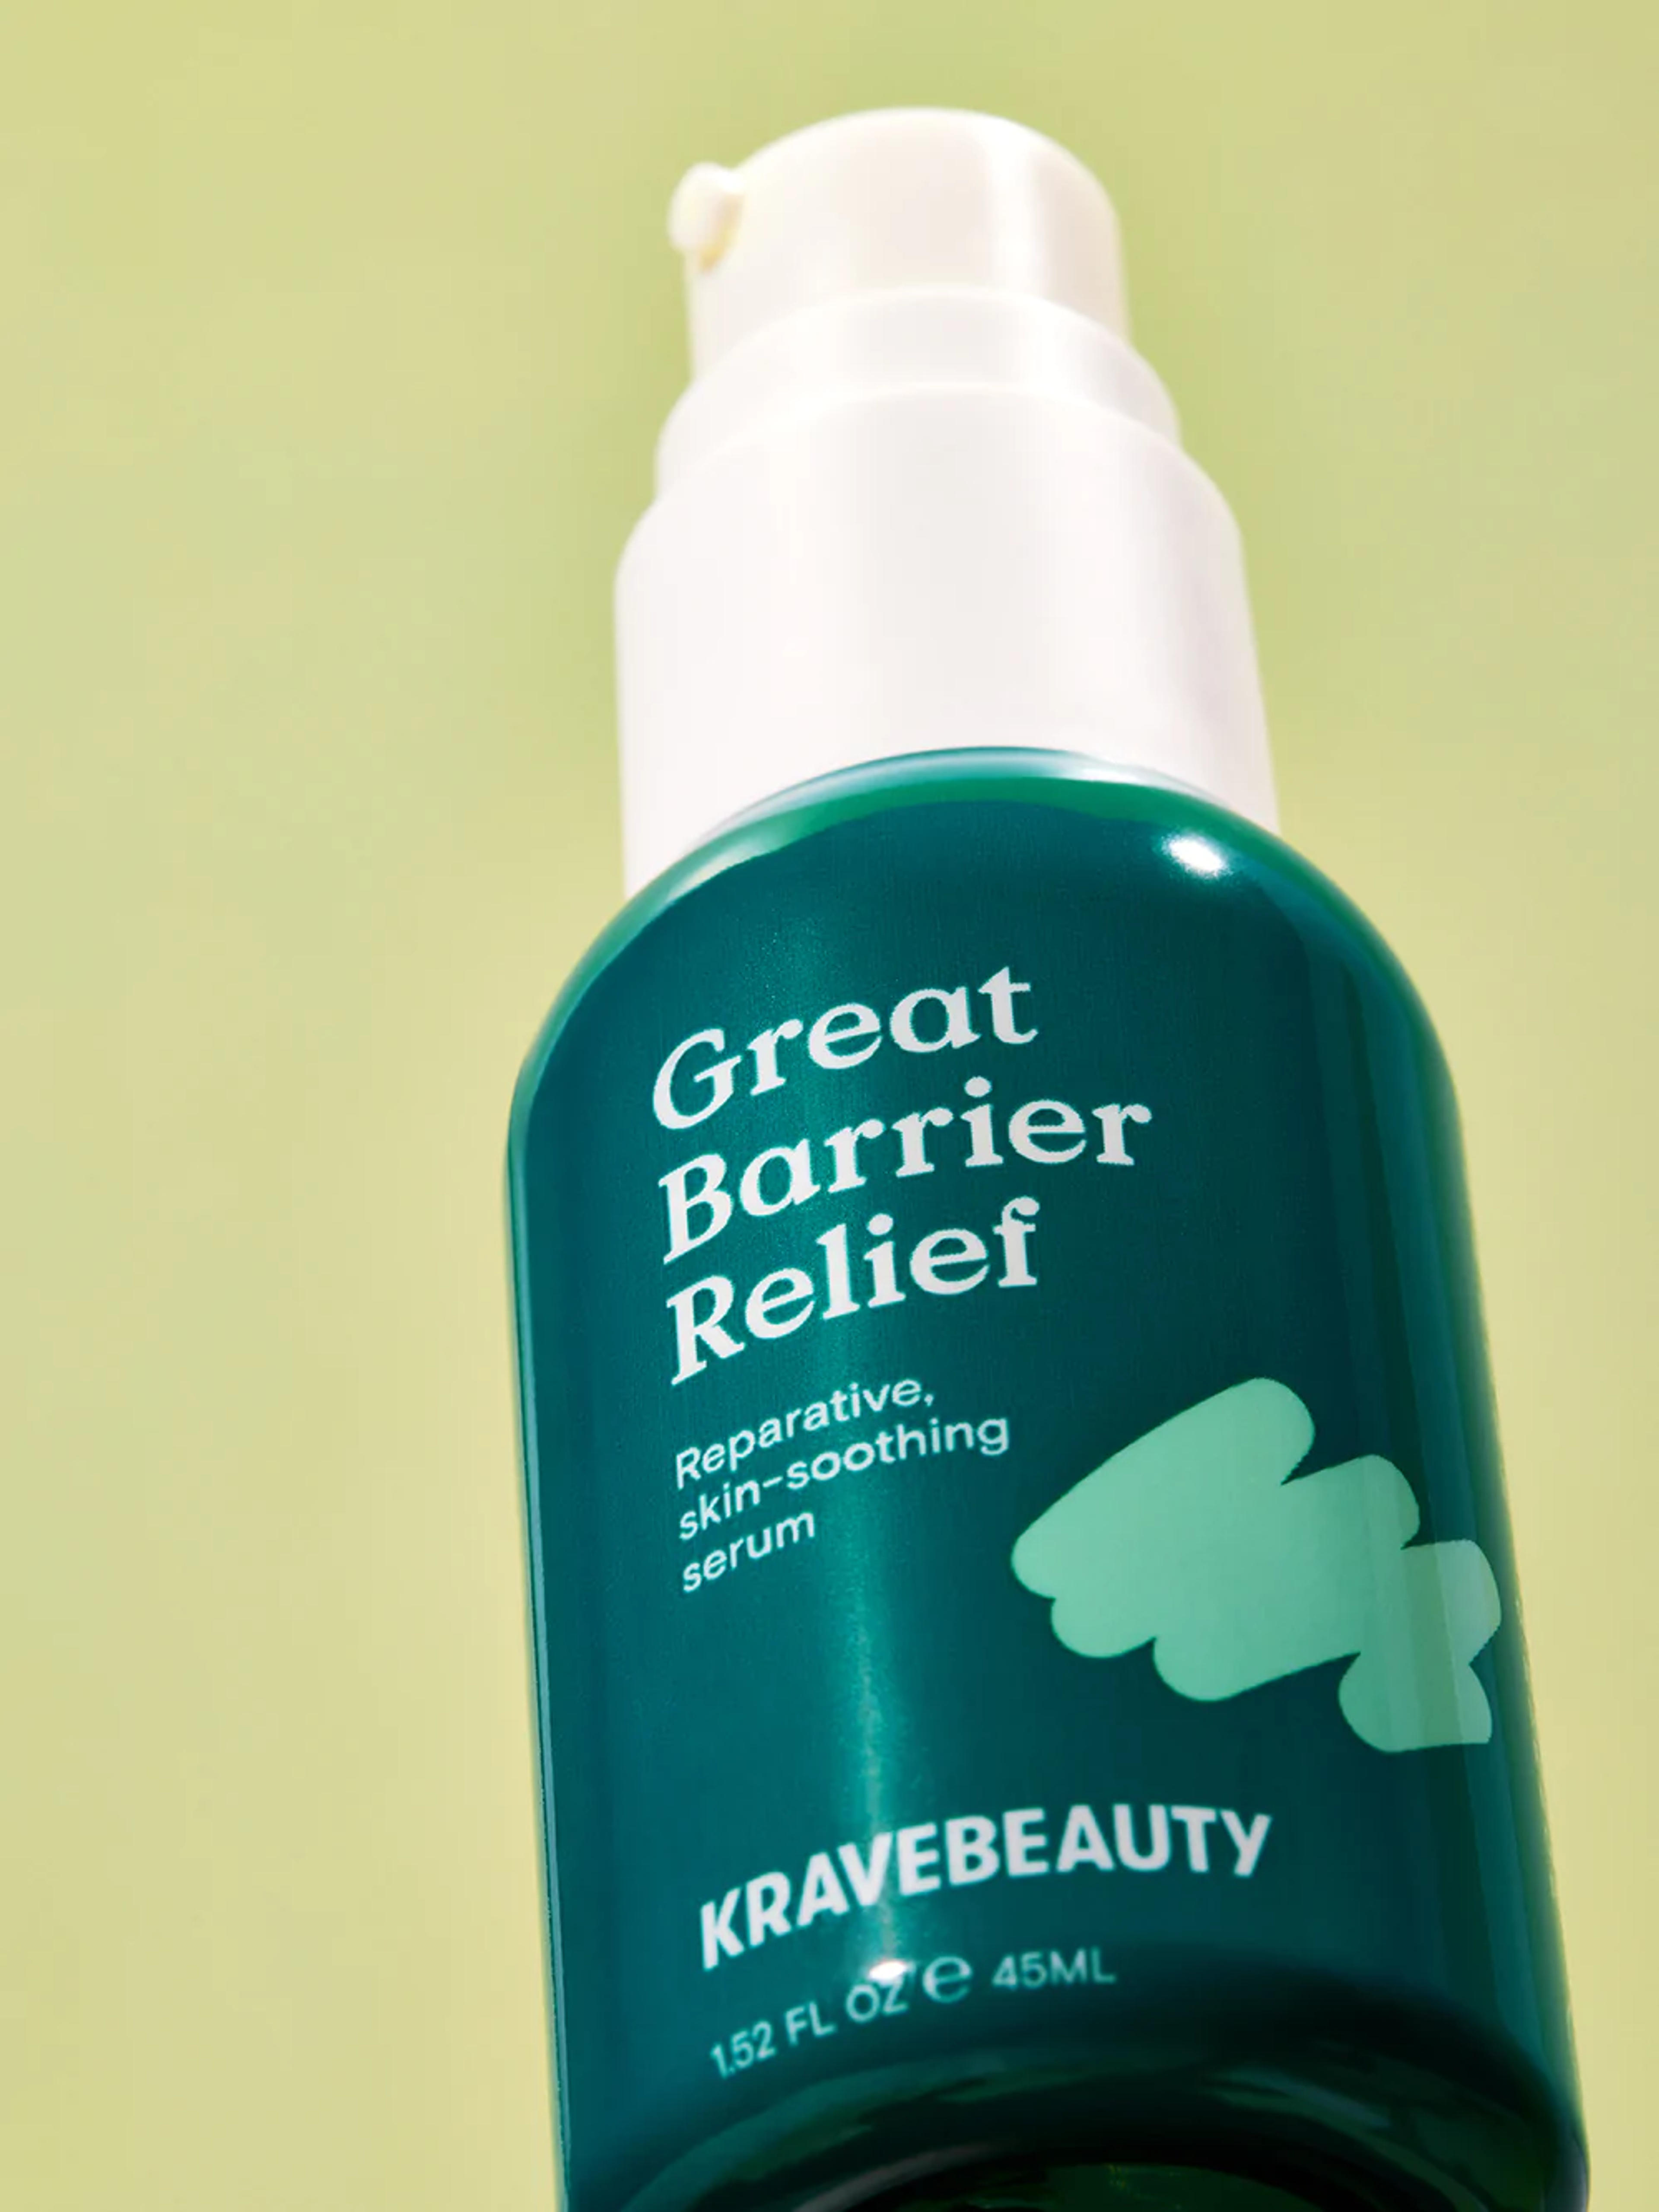 Great Barrier Relief: Skin Barrier Restoring Serum – KraveBeauty